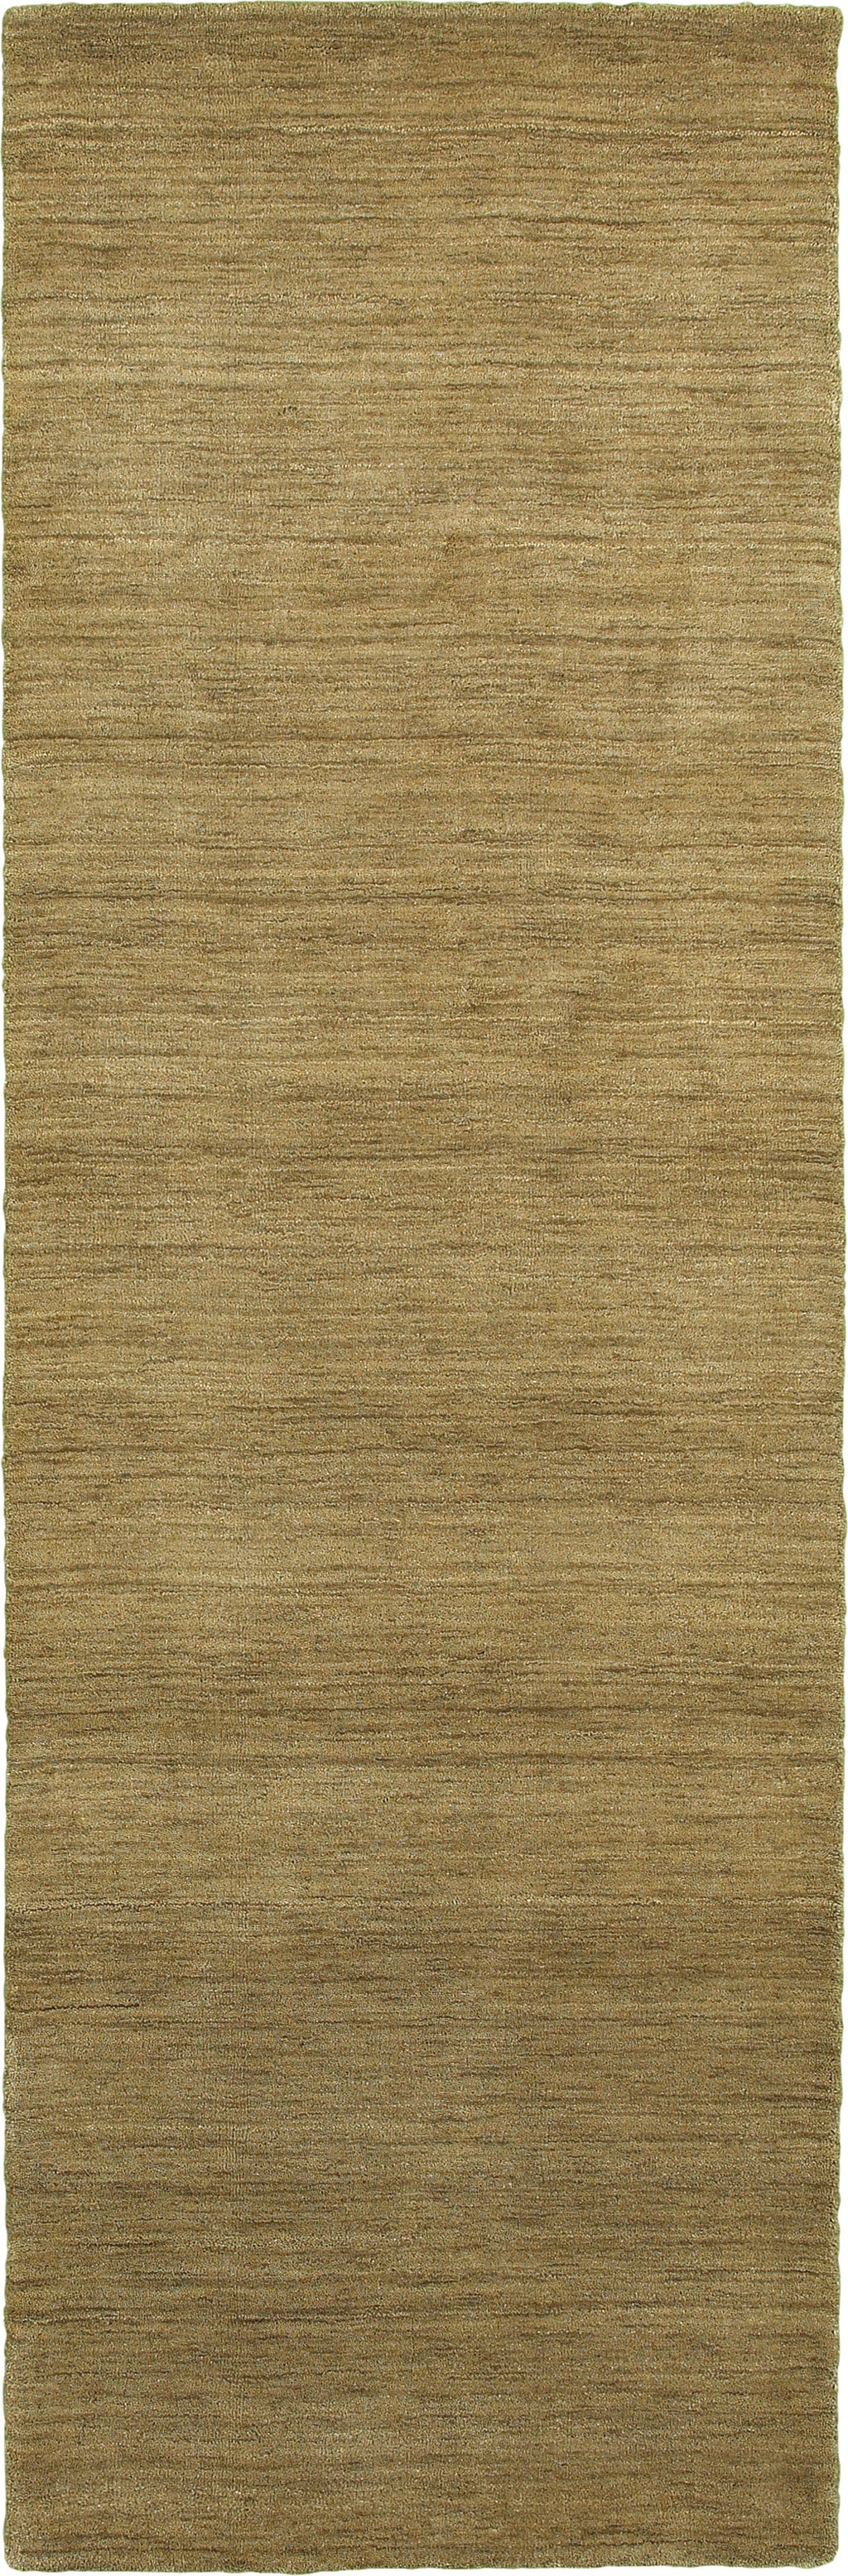 Oriental Weavers Aniston 27110 Gold/Gold Area Rug 2'6'' X 8' Runner Image